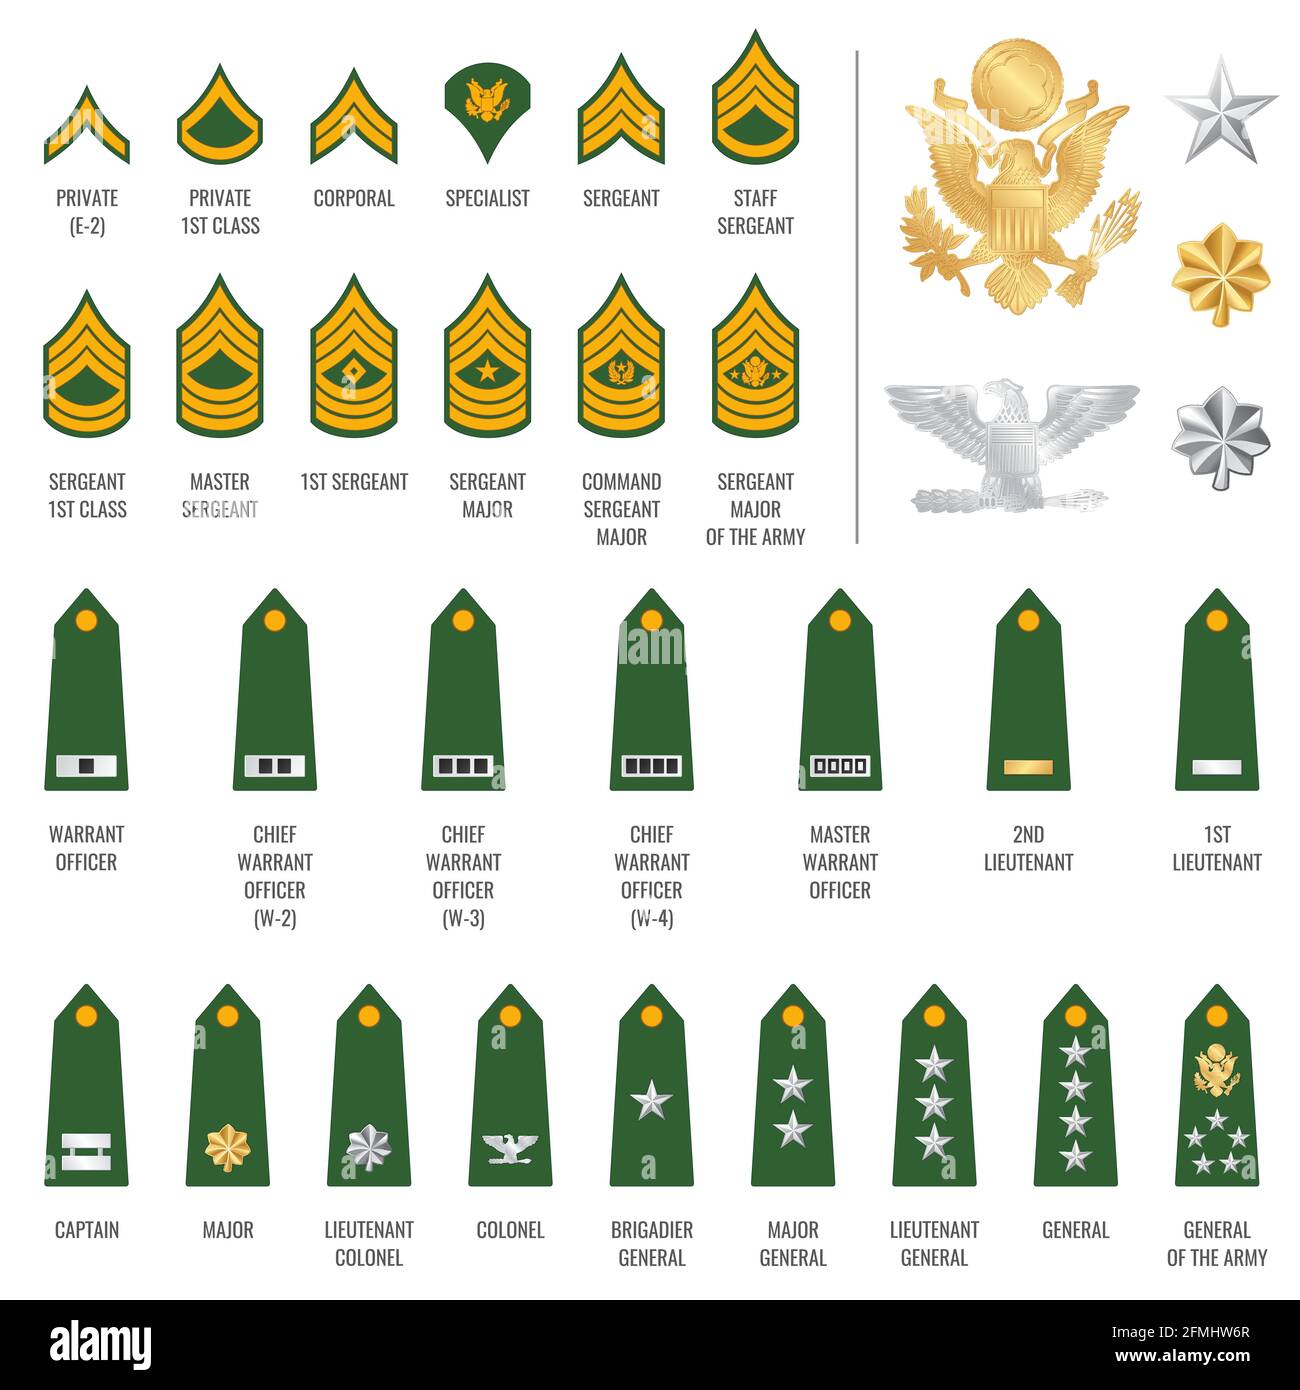 Genuine U.S army rank officer 2nd lieutenant insignia badge USA military pins